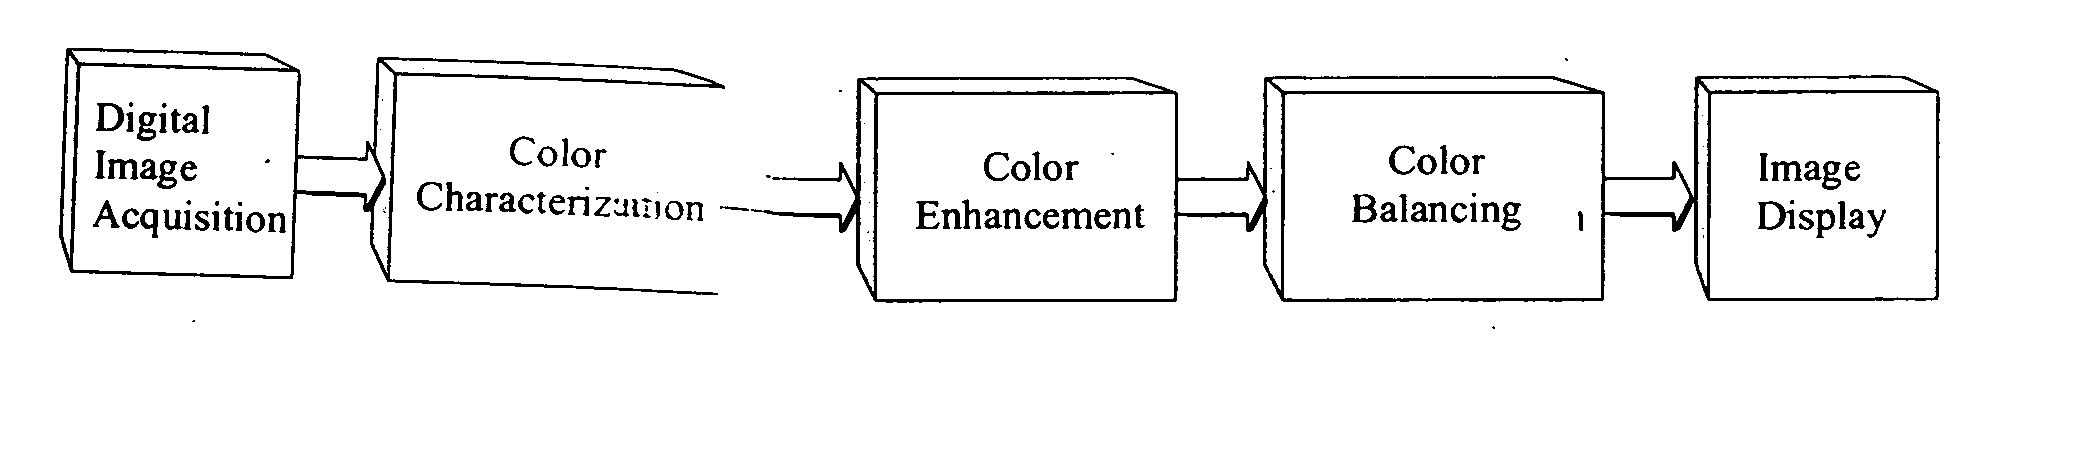 Color image characterization, enhancement and balancing process